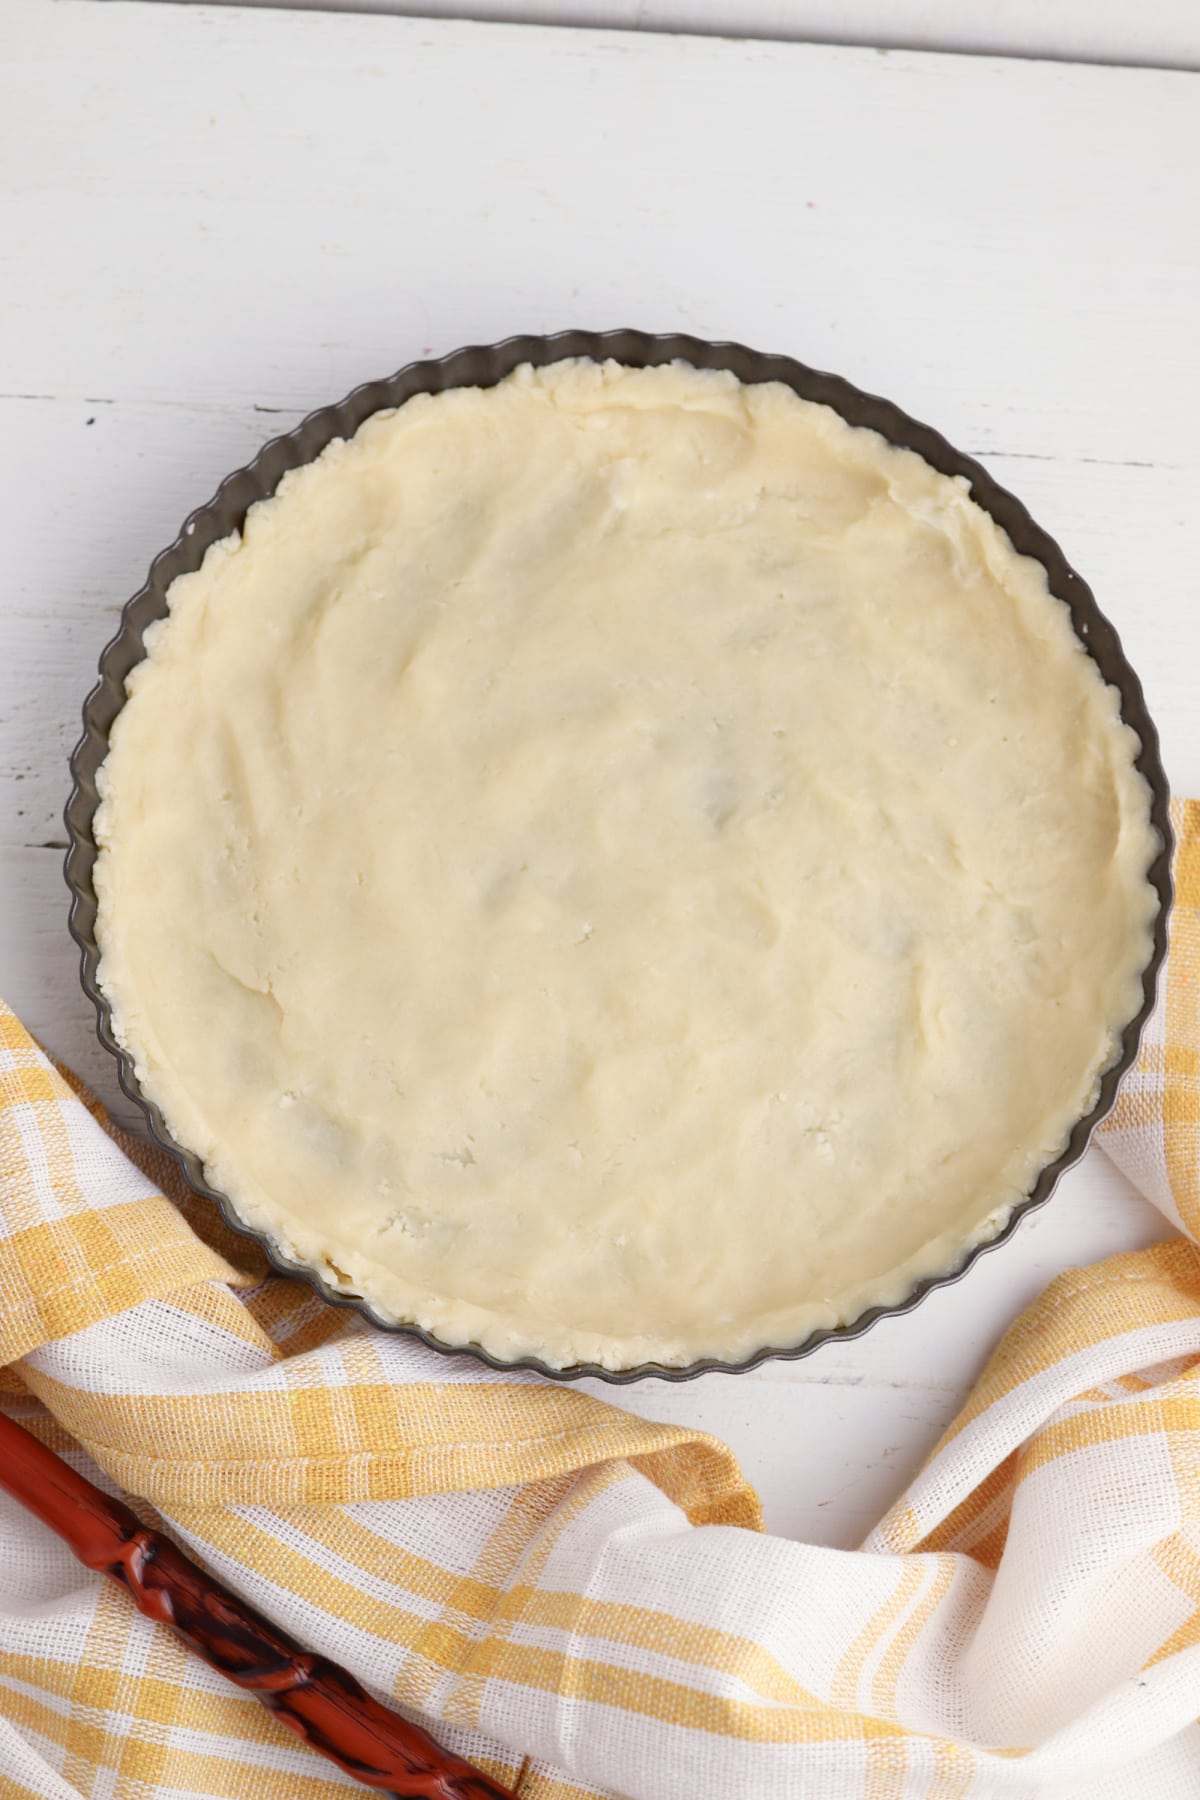 Treacle tart crust in tart pan